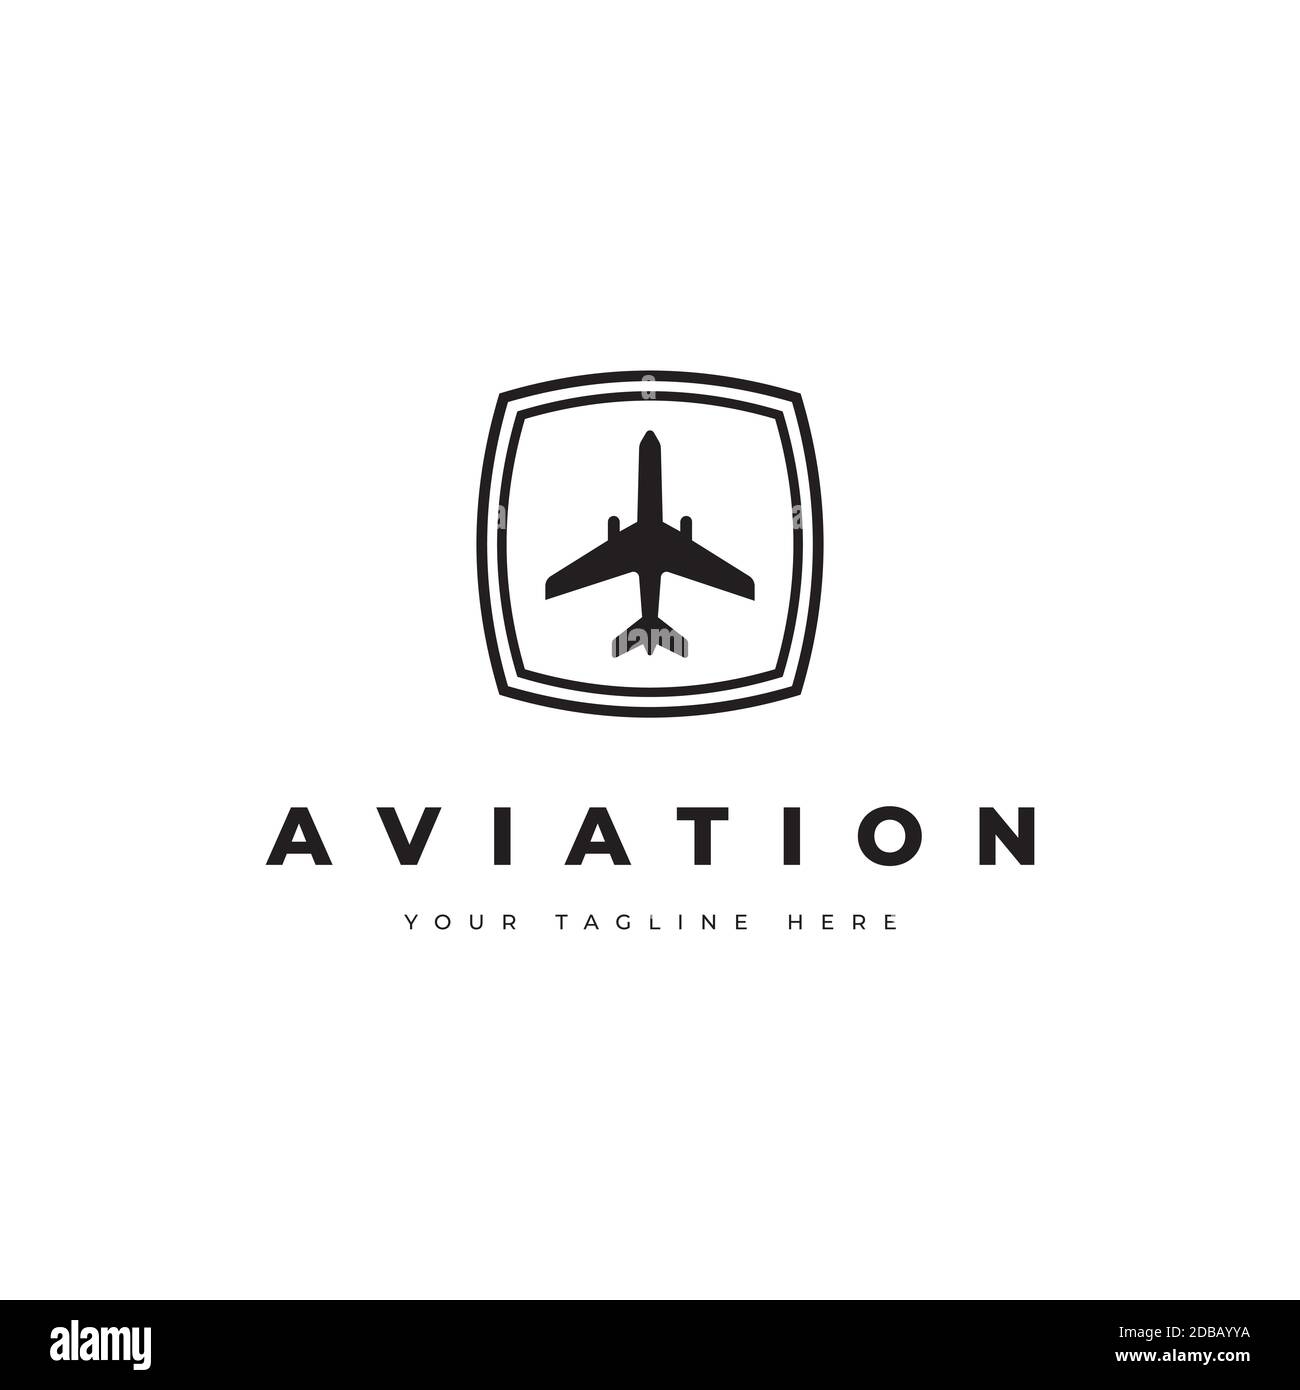 Aviation logo design vector template.Airplane element symbol Stock Vector